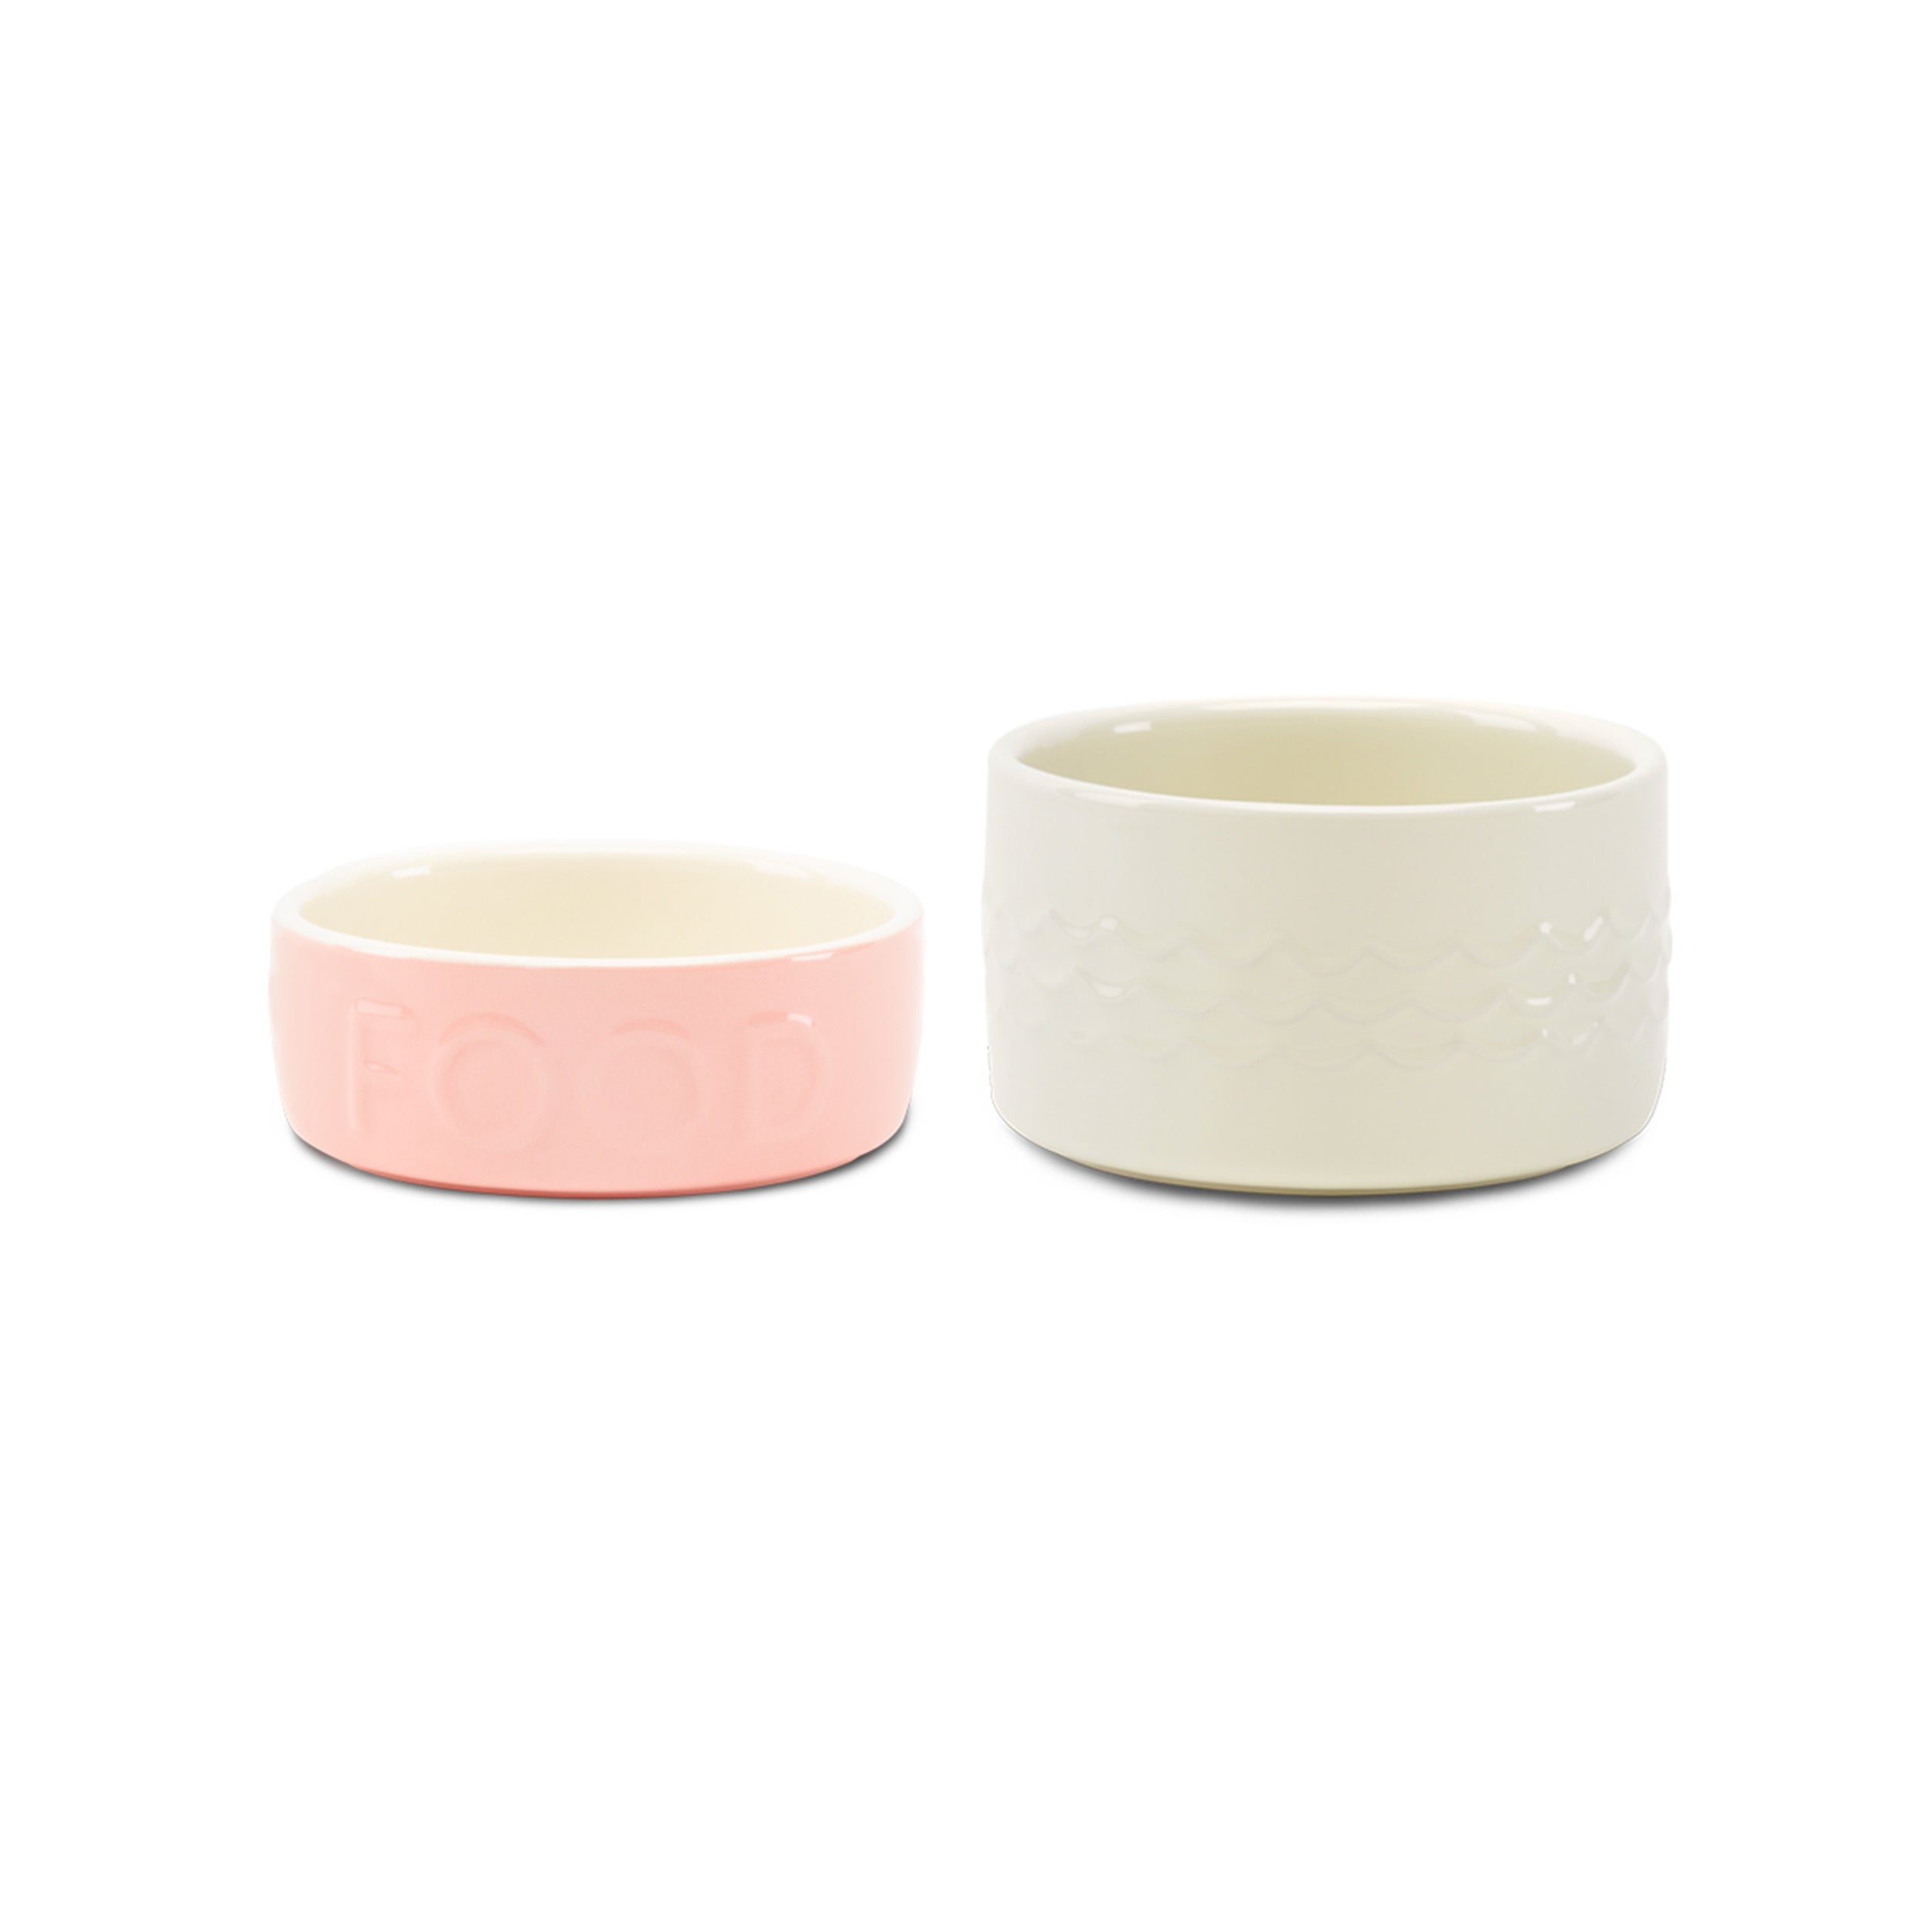 Scruffs Set of 2 Small Classic Pet Bowls Cream/Pink